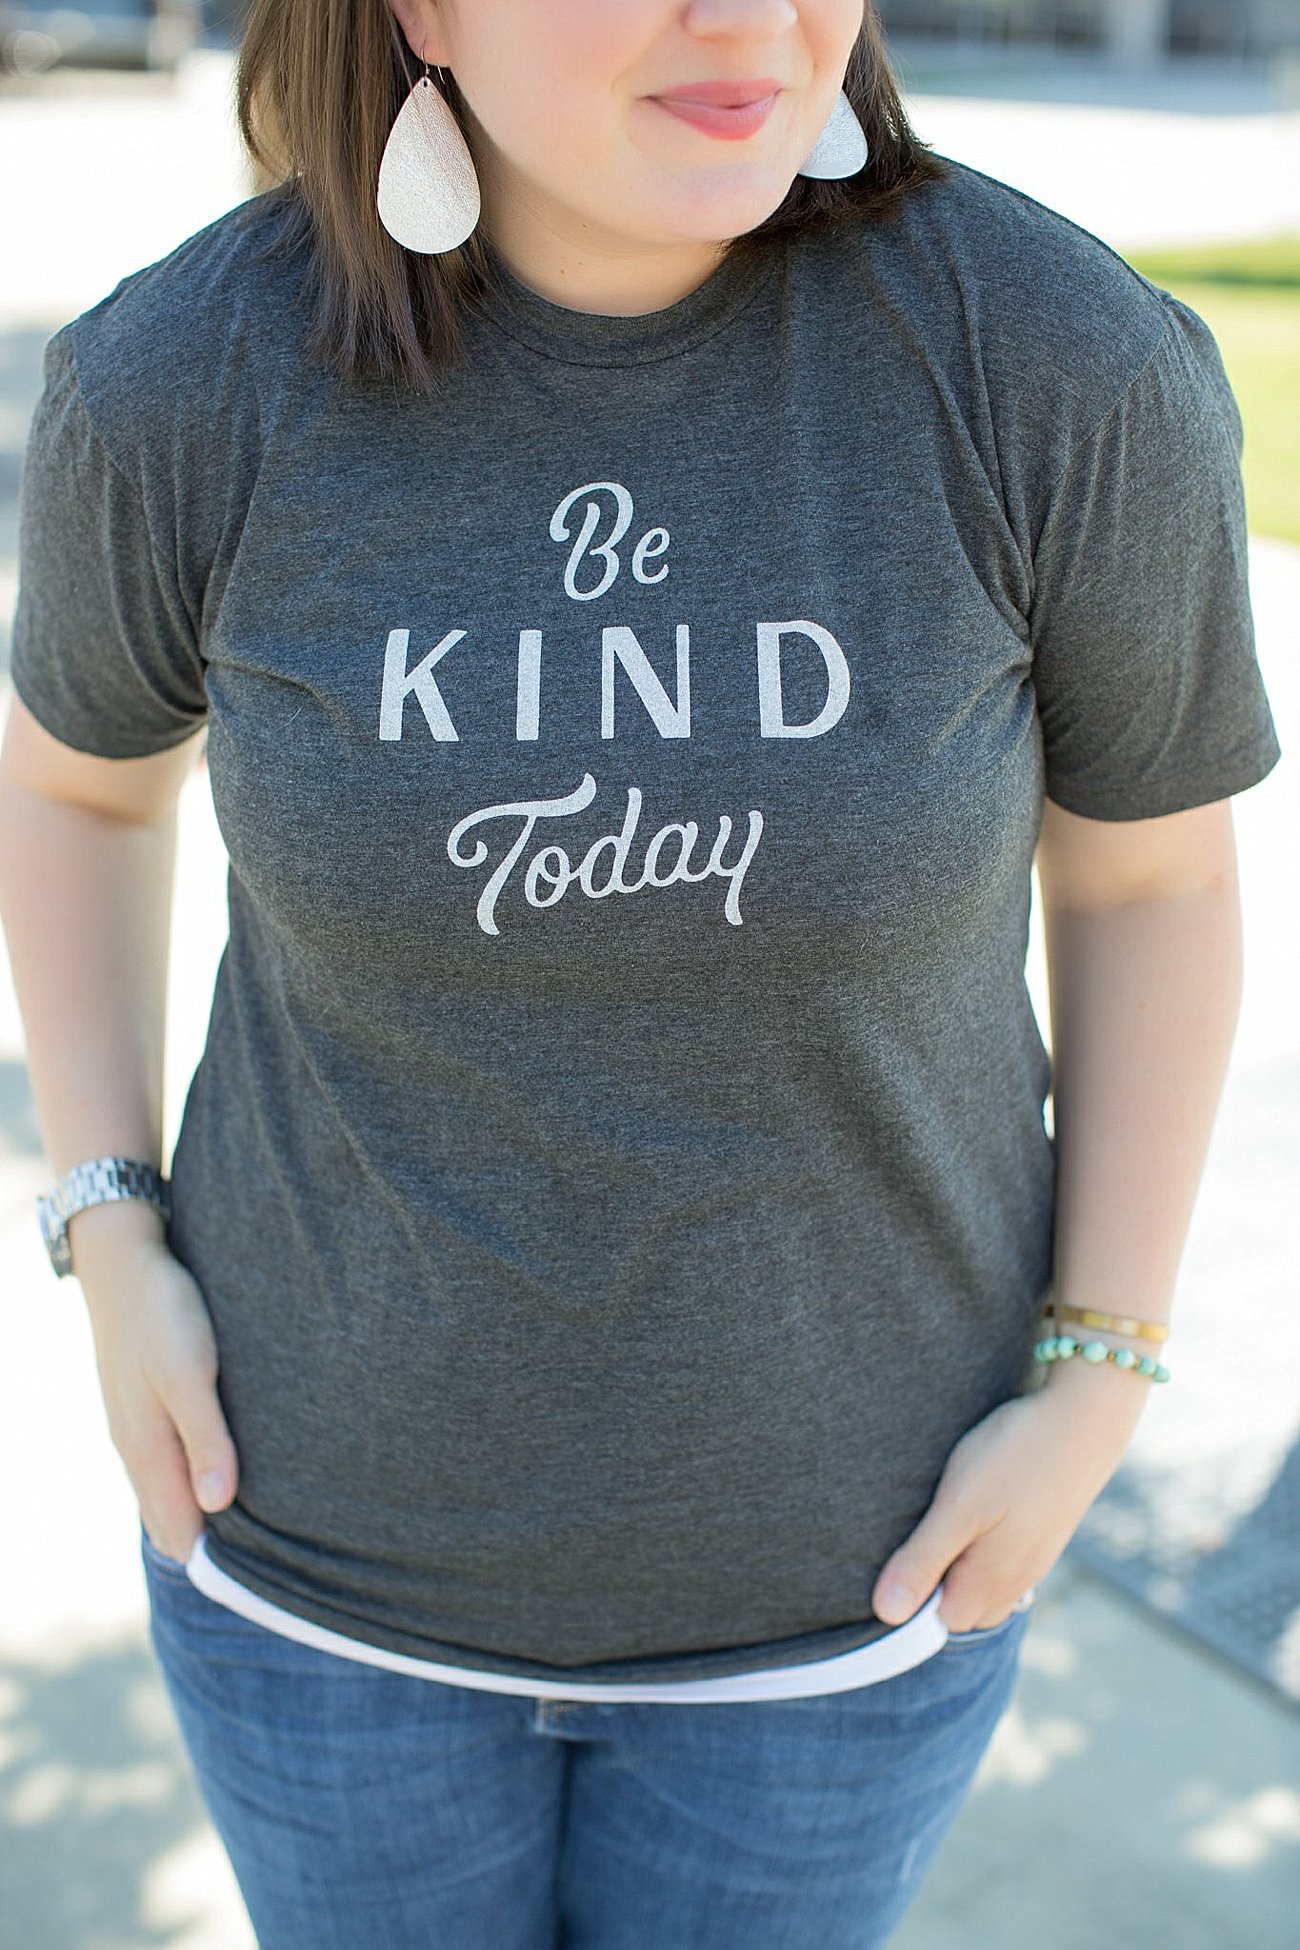 Doc Shorty "Be Kind Today" tee - #FashionForGood, Ethical Fashion | North Carolina Lifestyle Blogger (2)